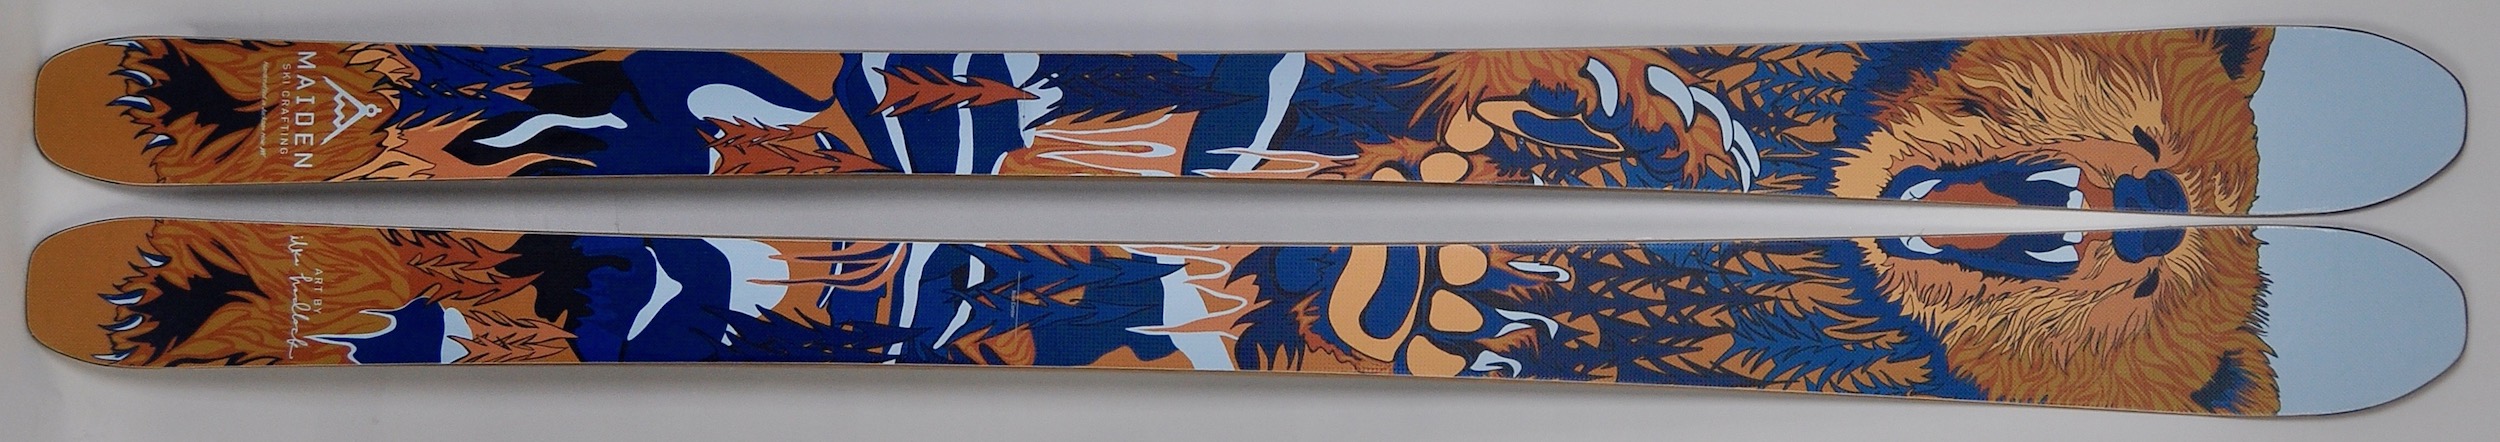 Maiden Skis - Tear Bear Graphics - Ilka Hadlock - Custom Ski